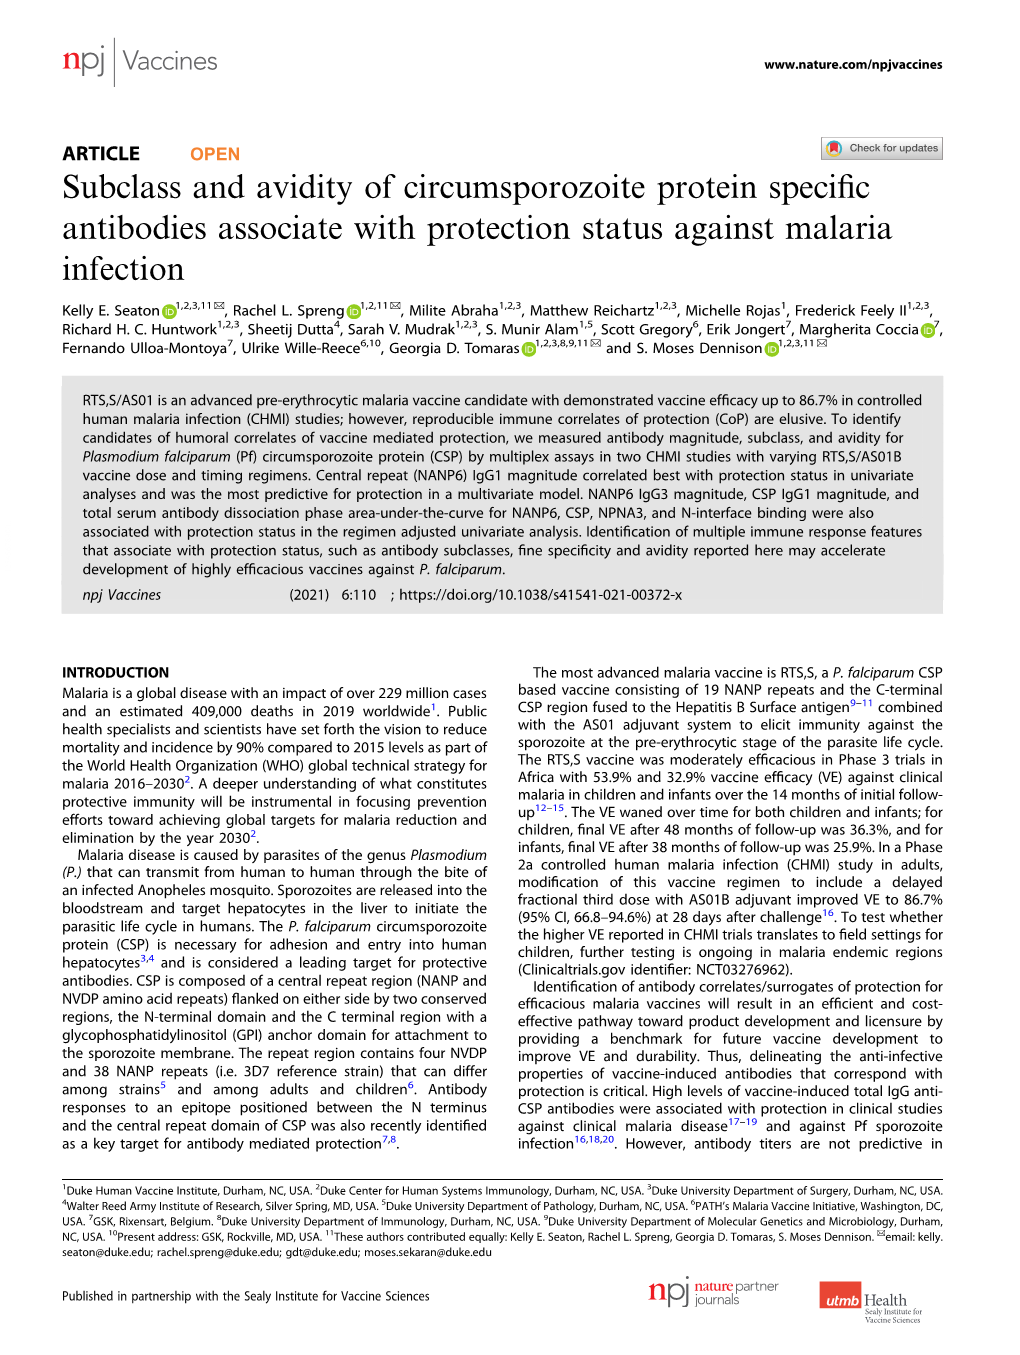 Subclass and Avidity of Circumsporozoite Protein Specific